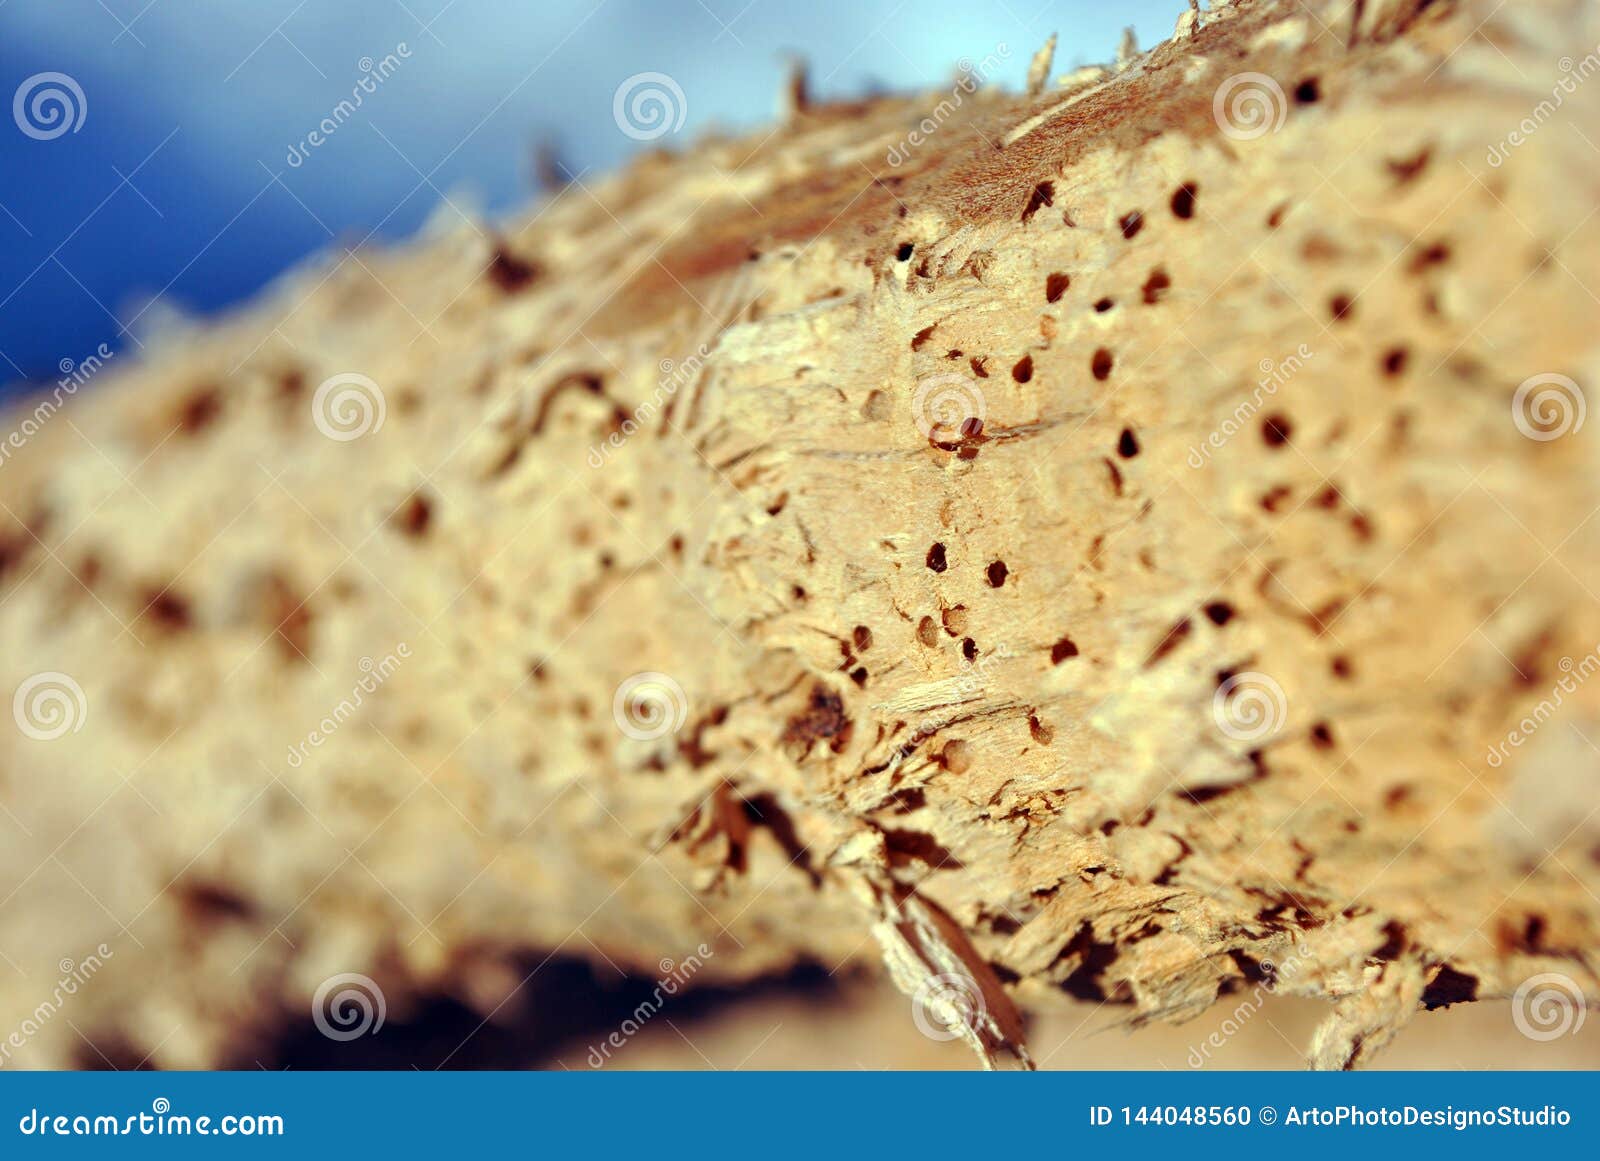 termite holes in tree